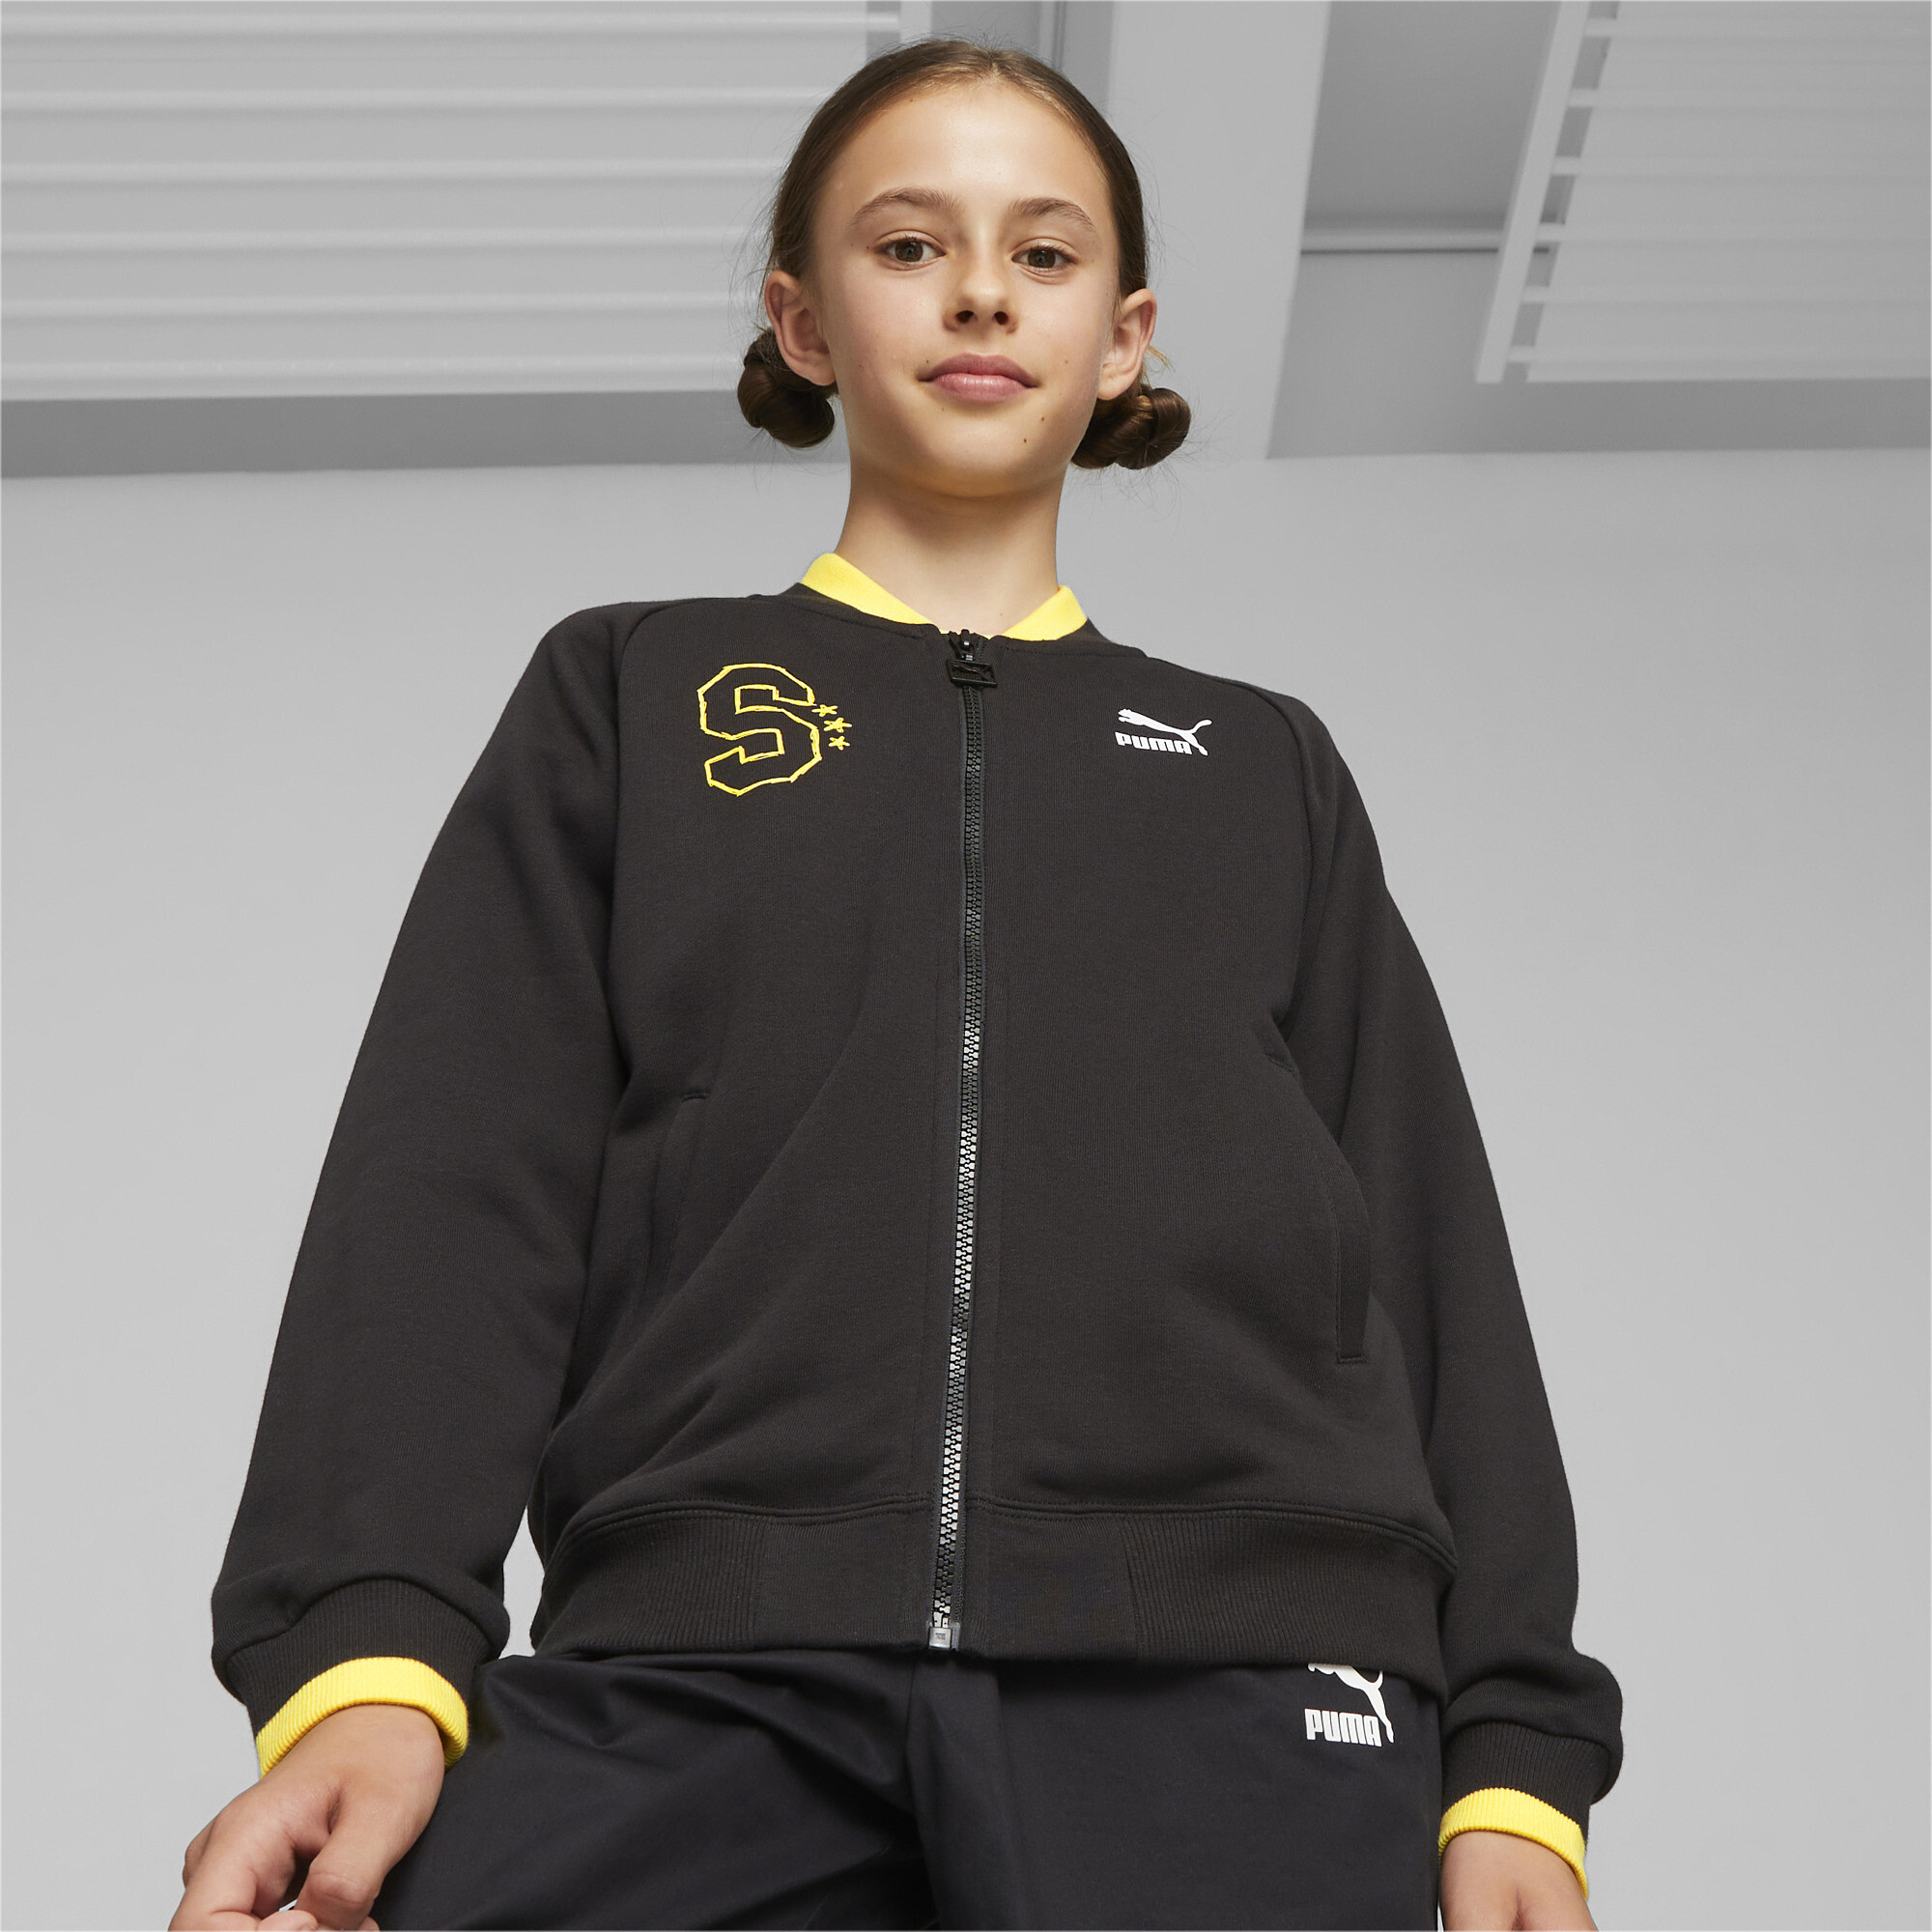 Puma X SPONGEBOB SQUAREPANTS Youth Jacket, Black, Size 7-8Y, Clothing